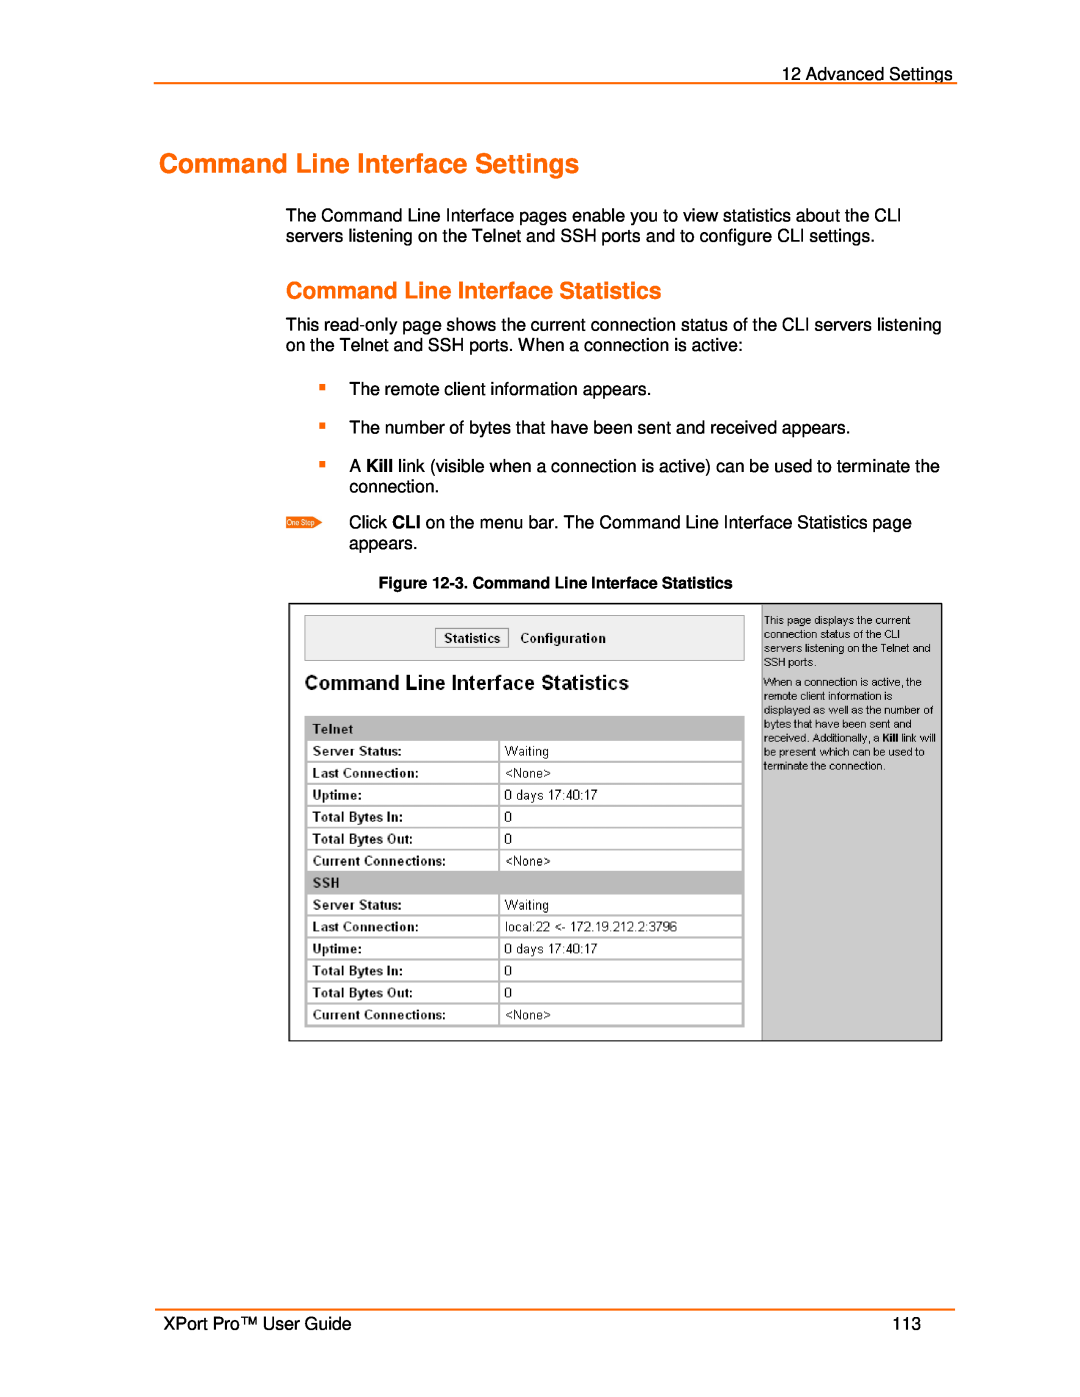 Lantronix 900-560 manual Command Line Interface Settings, Command Line Interface Statistics 